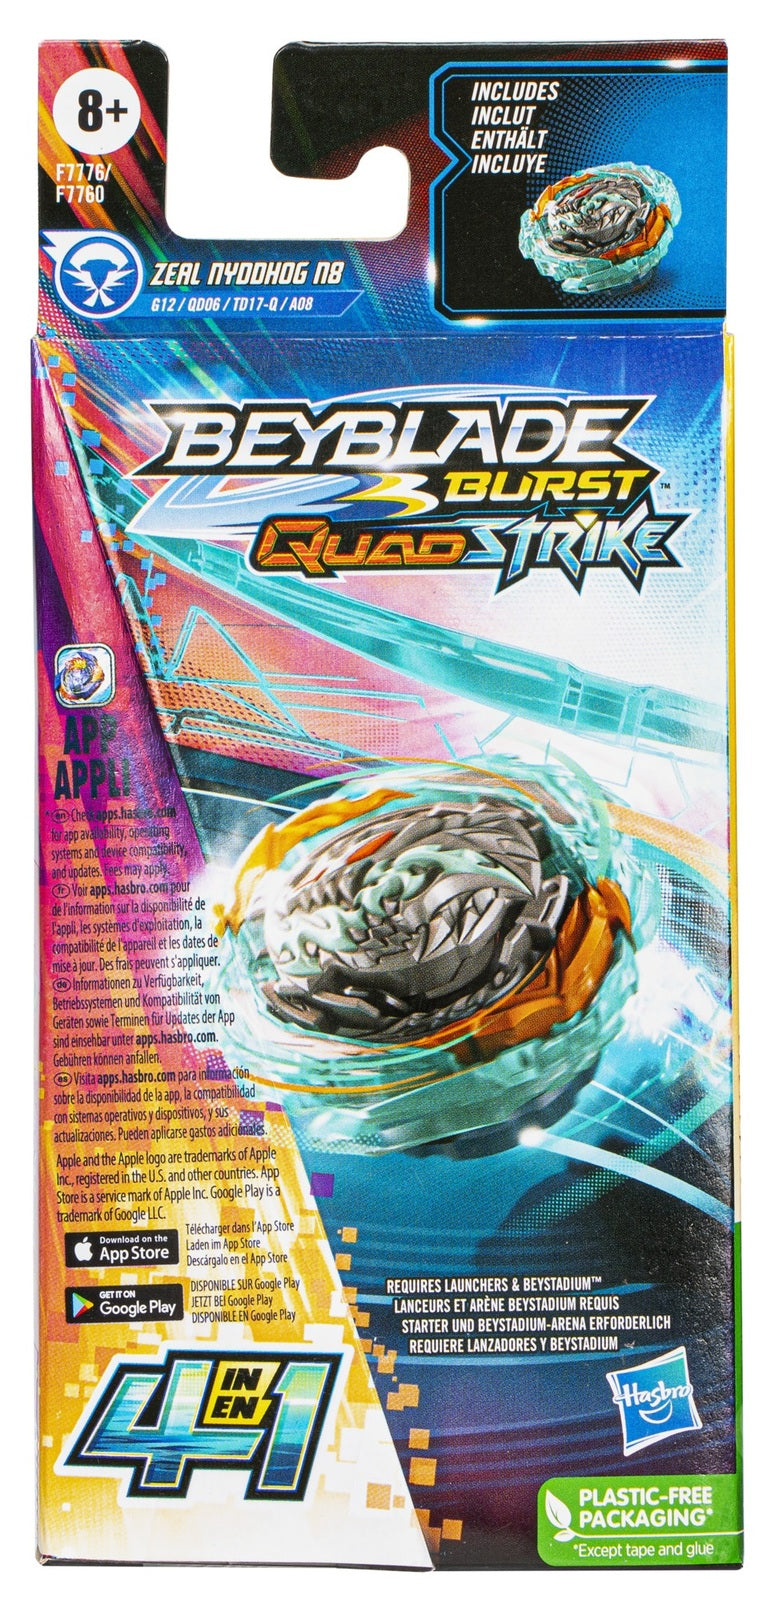  Beyblade Burst QuadStrike - Zeal Nyddhog N8 - Not